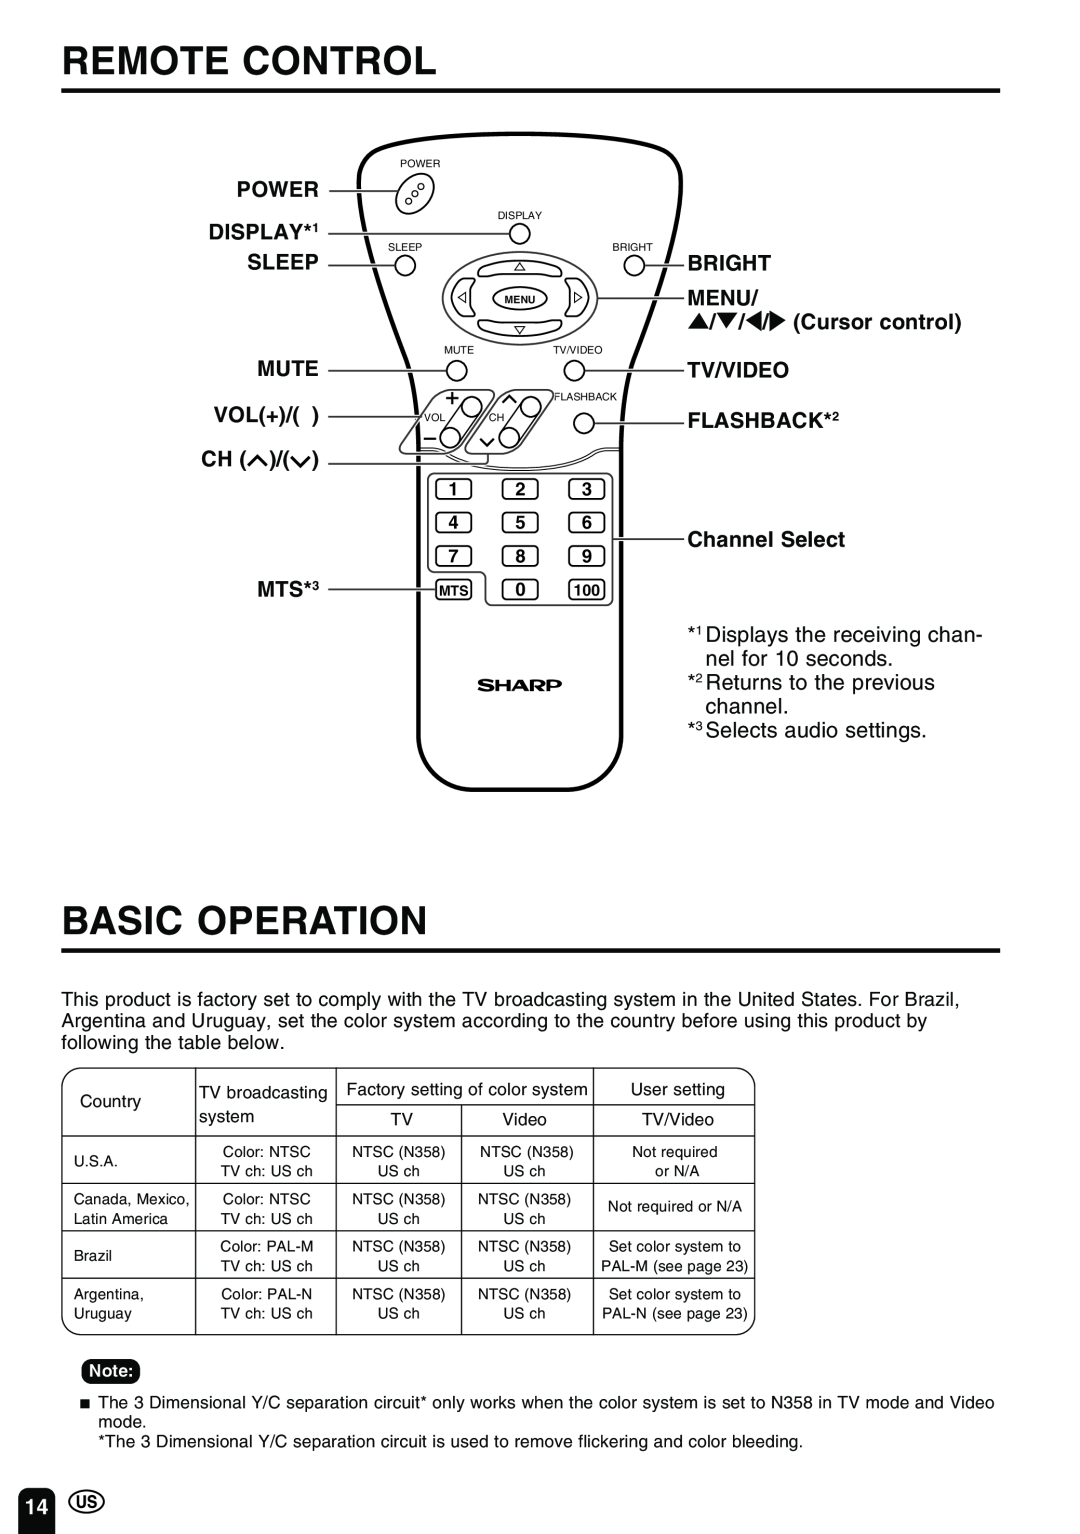 Sharp LC-20B2UA Remote Control, Basic Operation, Power, DISPLAY*1, Sleep, BRIGHT MENU Cursor control, Mute Vol+ Ch 